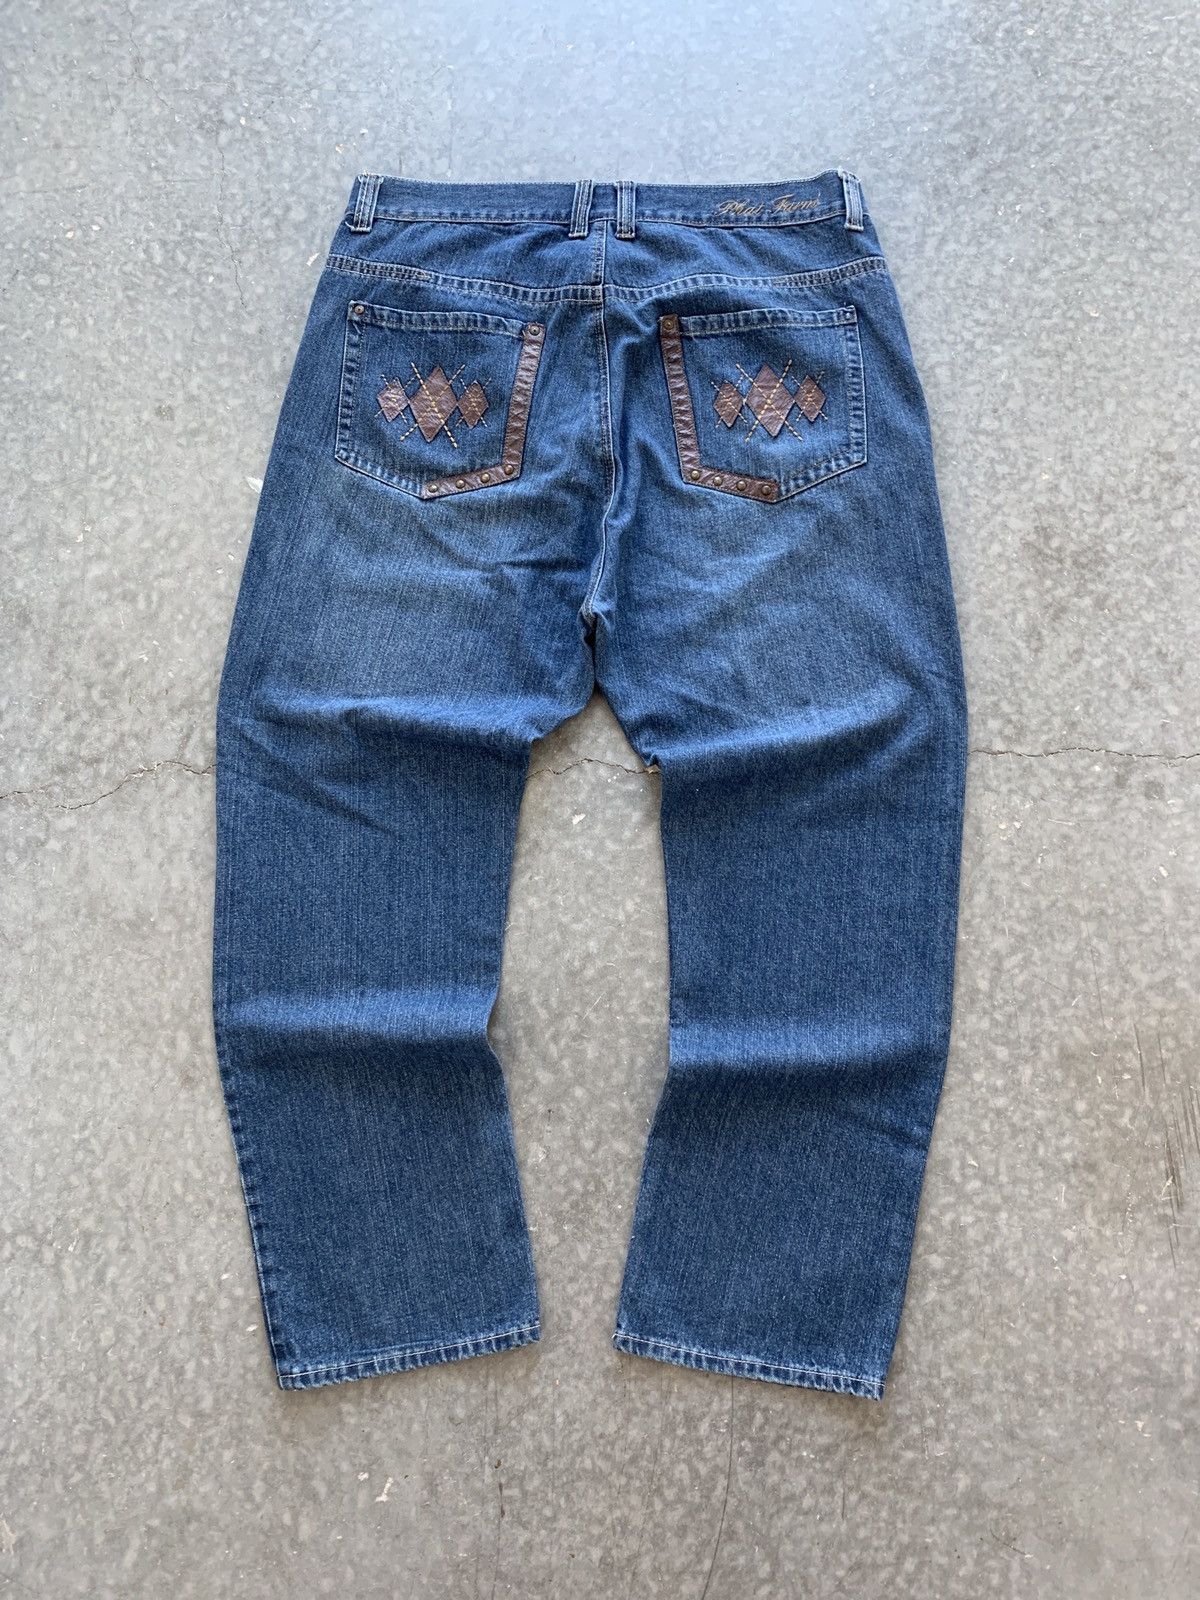 Southpole Crazy Vintage Y2K Phat Farm Baggy Jeans Skater Opium | Grailed